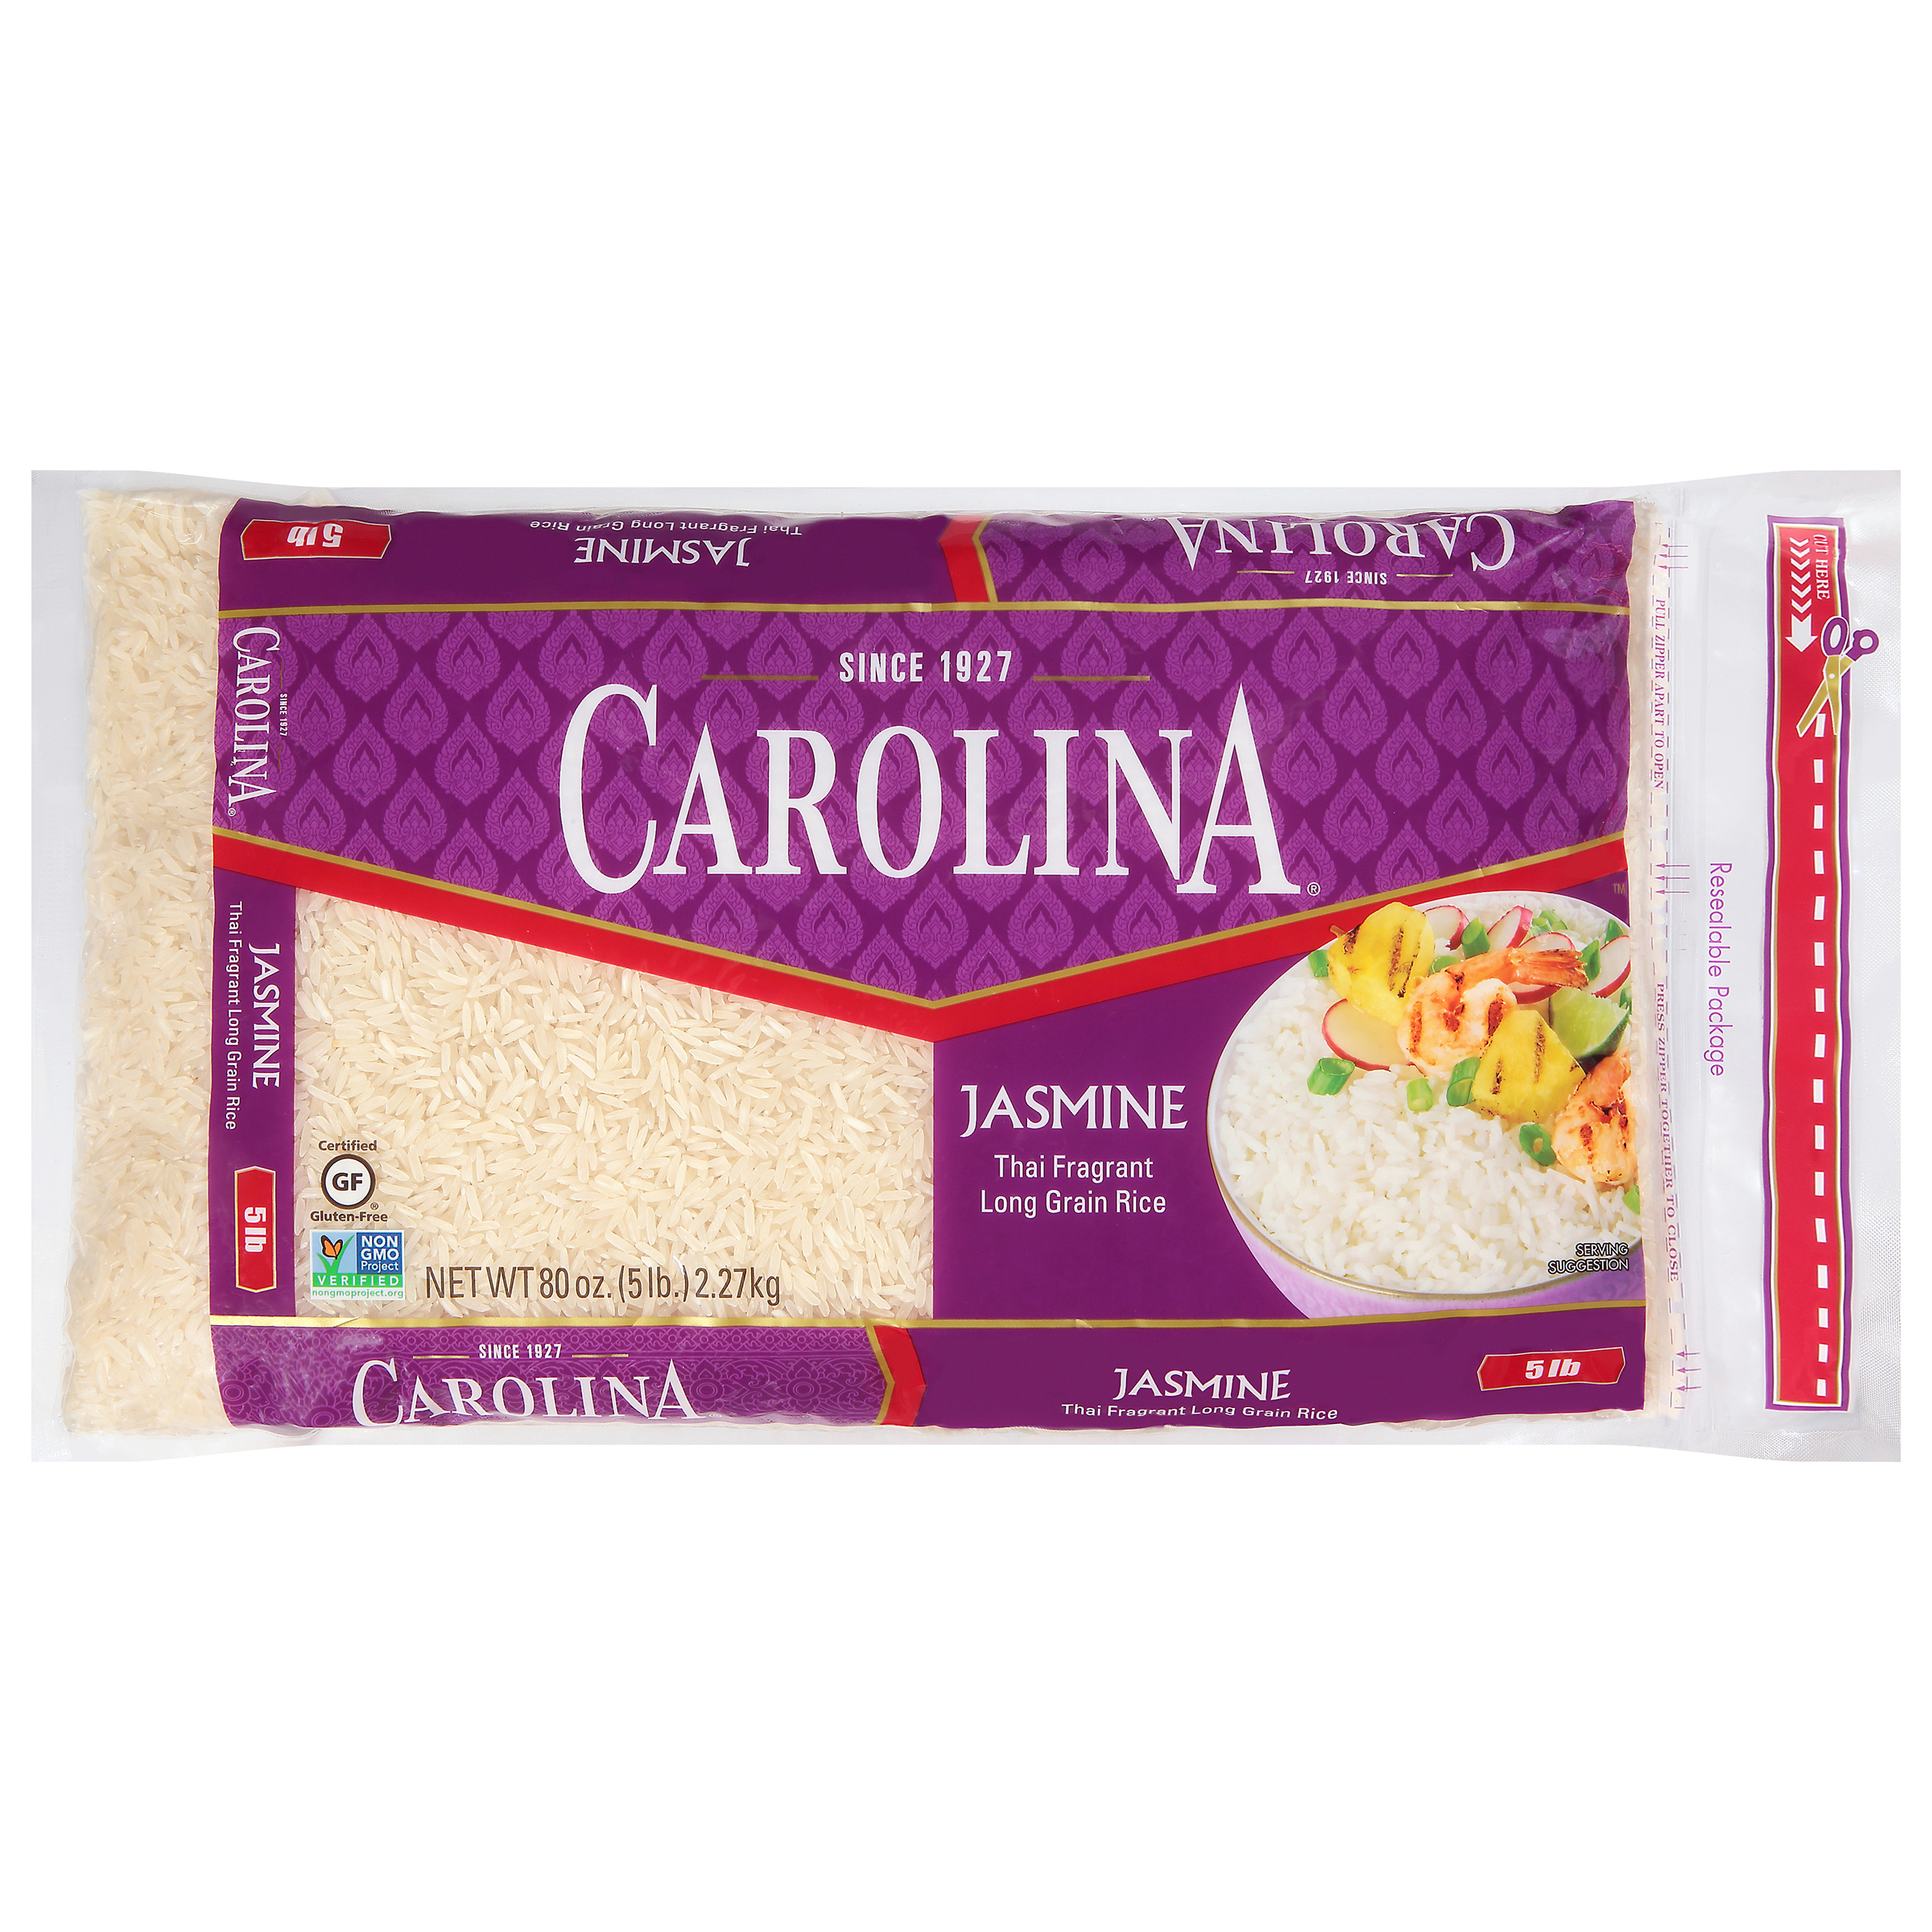 Carolina Jasmine White Rice, Thai Fragrant Long Grain Rice, 5 lb Bag - image 1 of 7